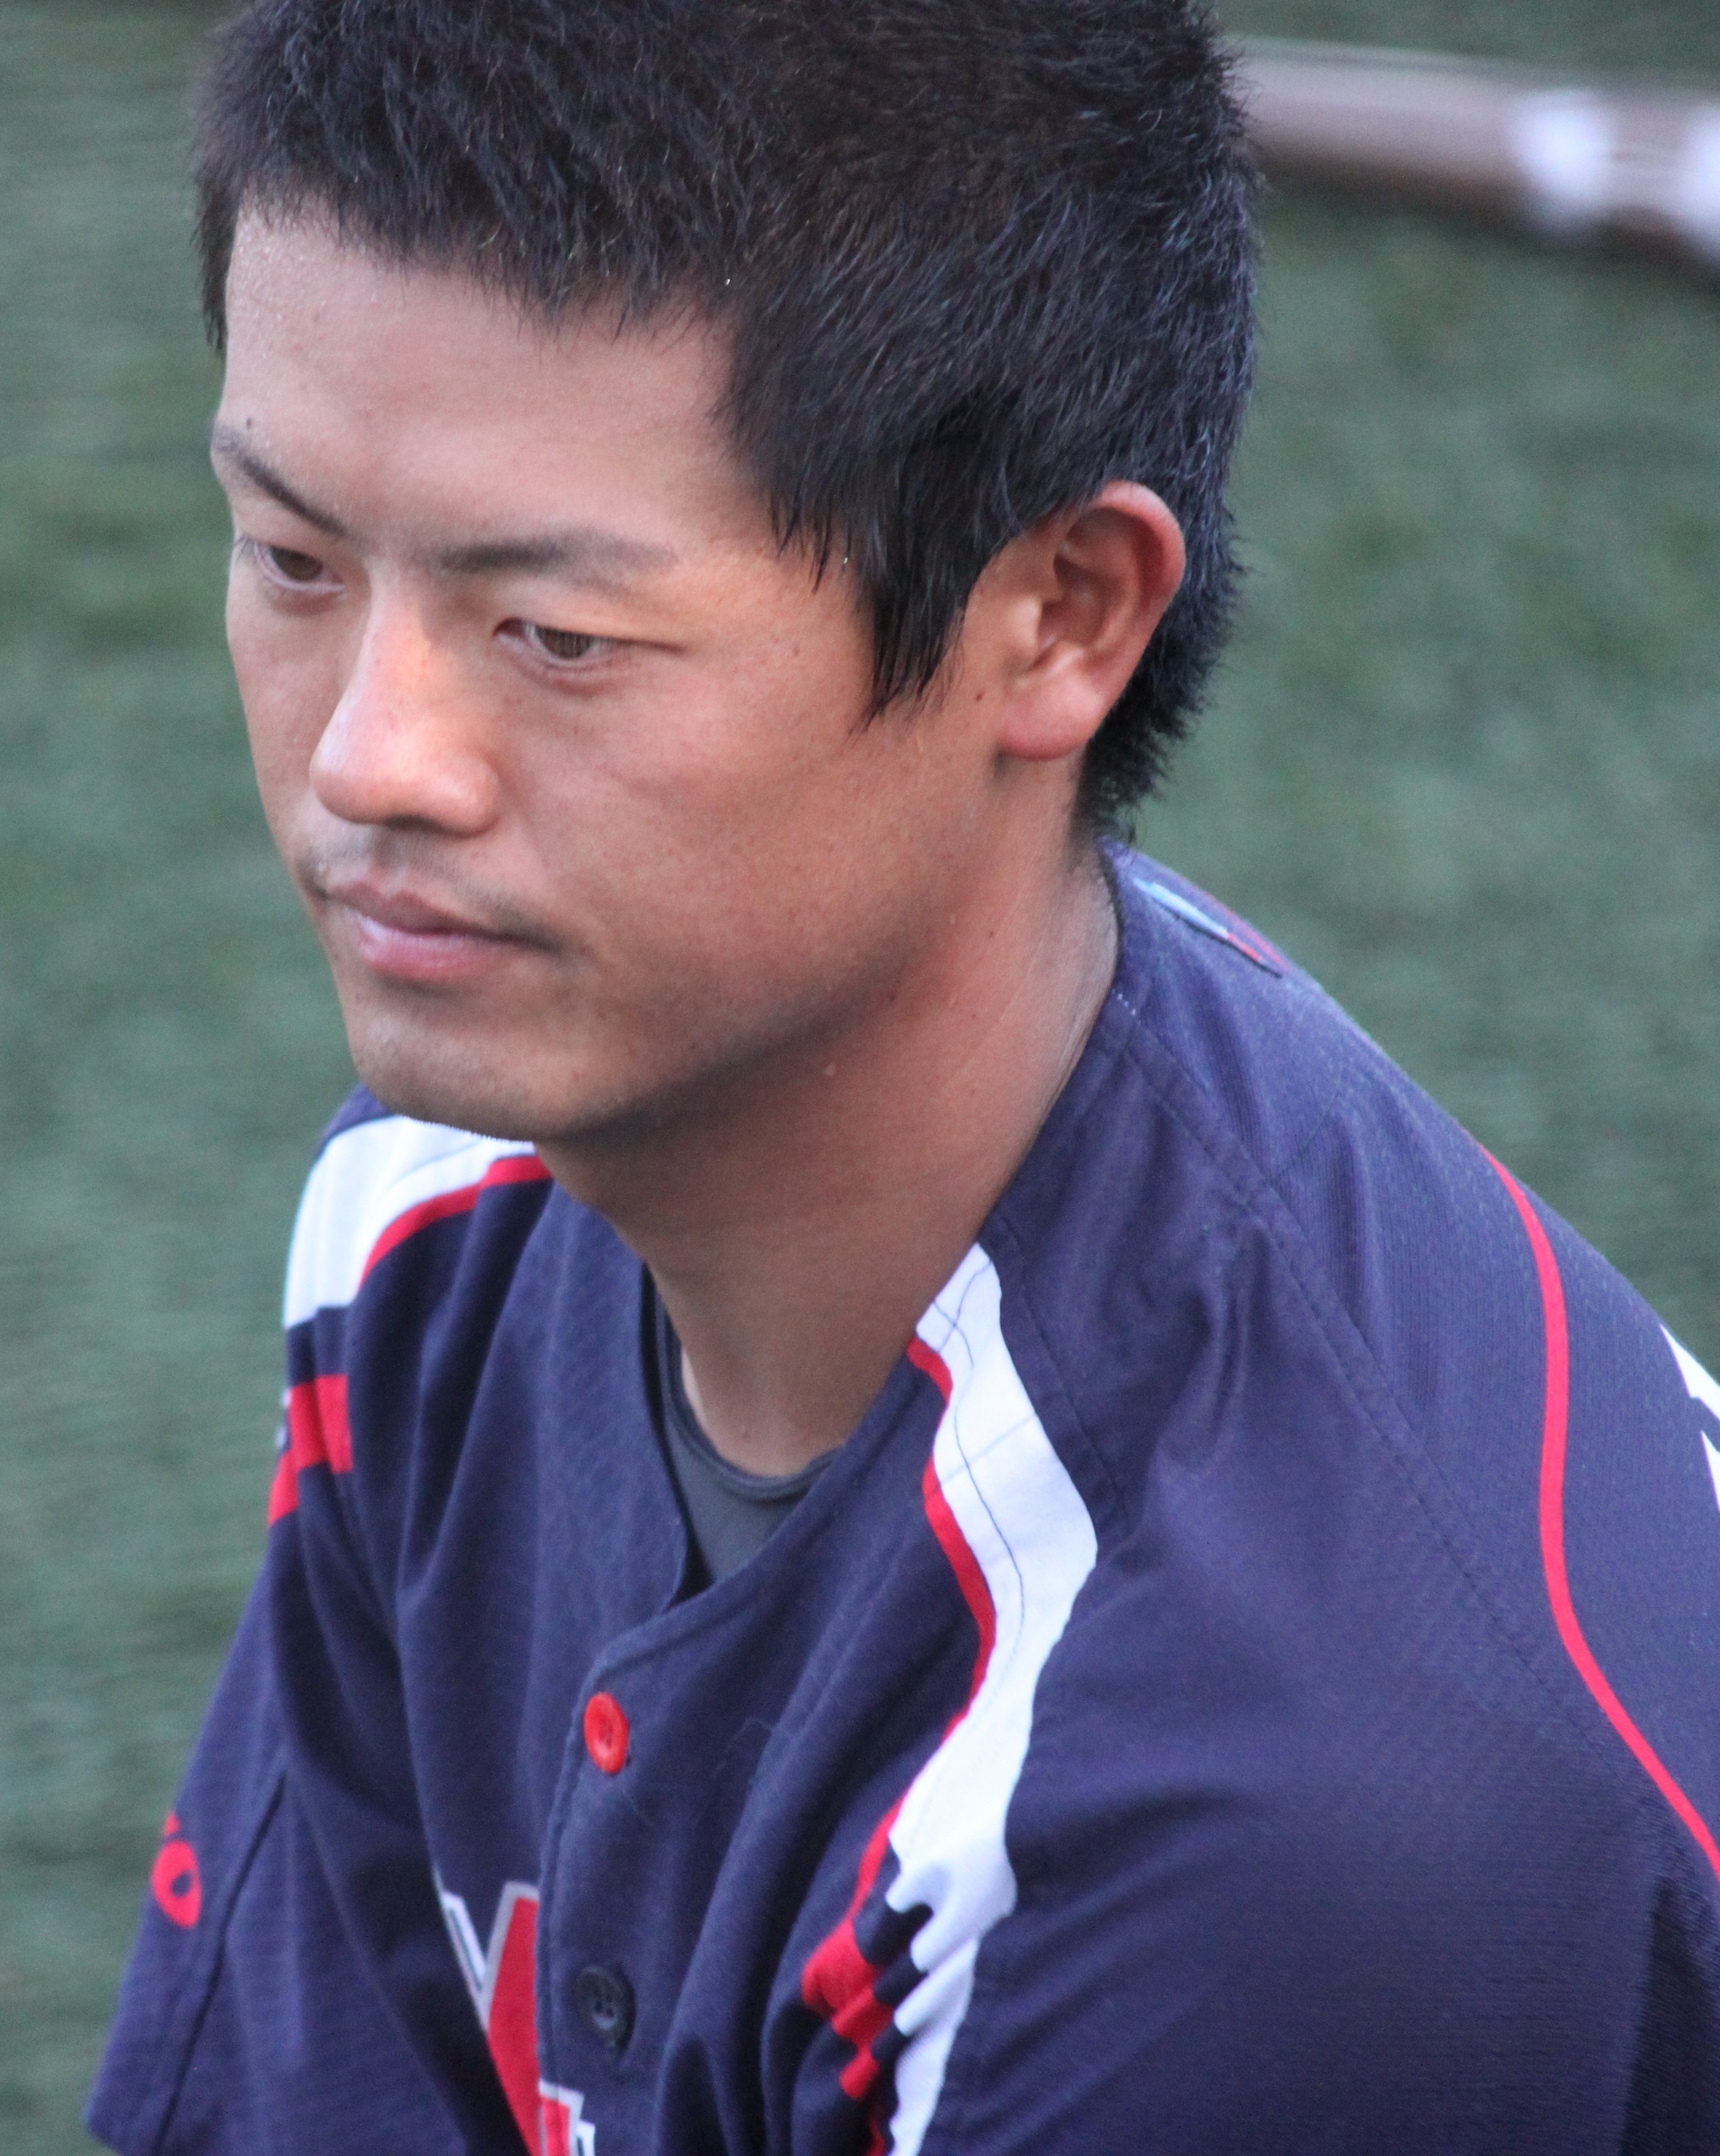 20140817 Tomoya Matano, infielder of the Tokyo Yakult Swallows, at Yokosuka Stadium.JPG